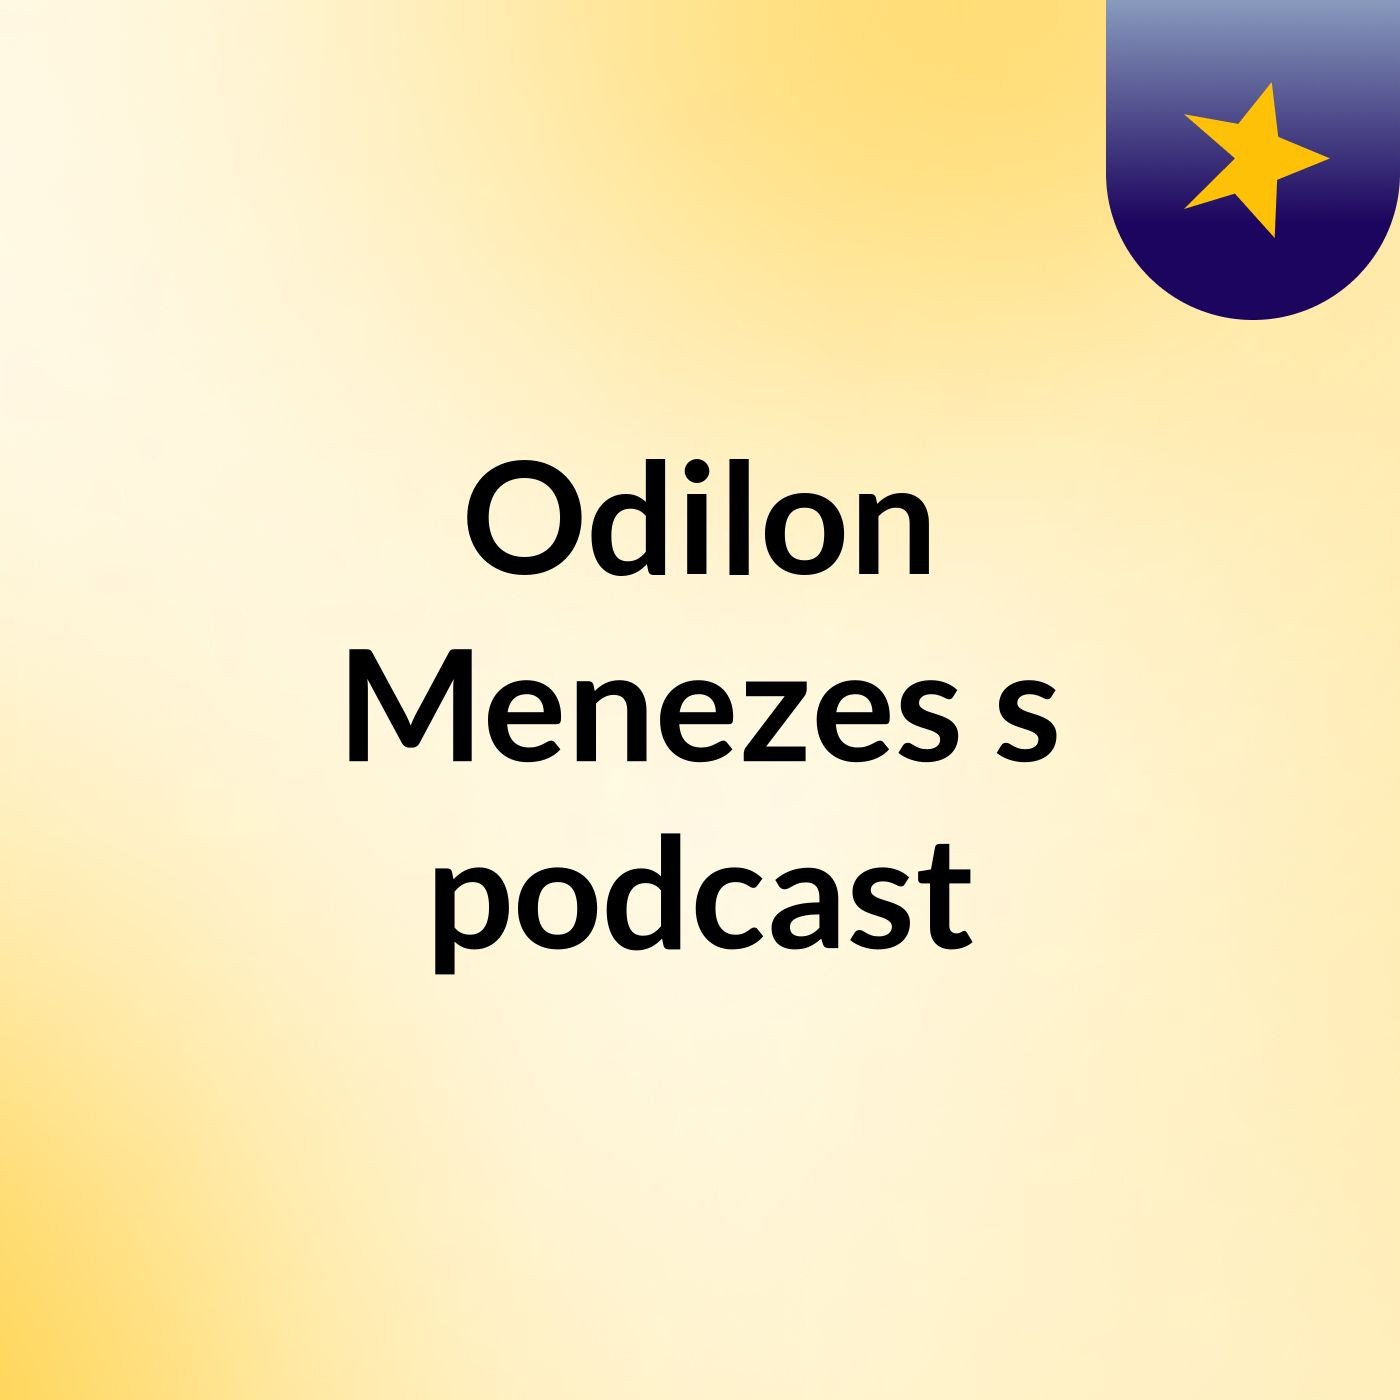 Odilon Menezes's podcast